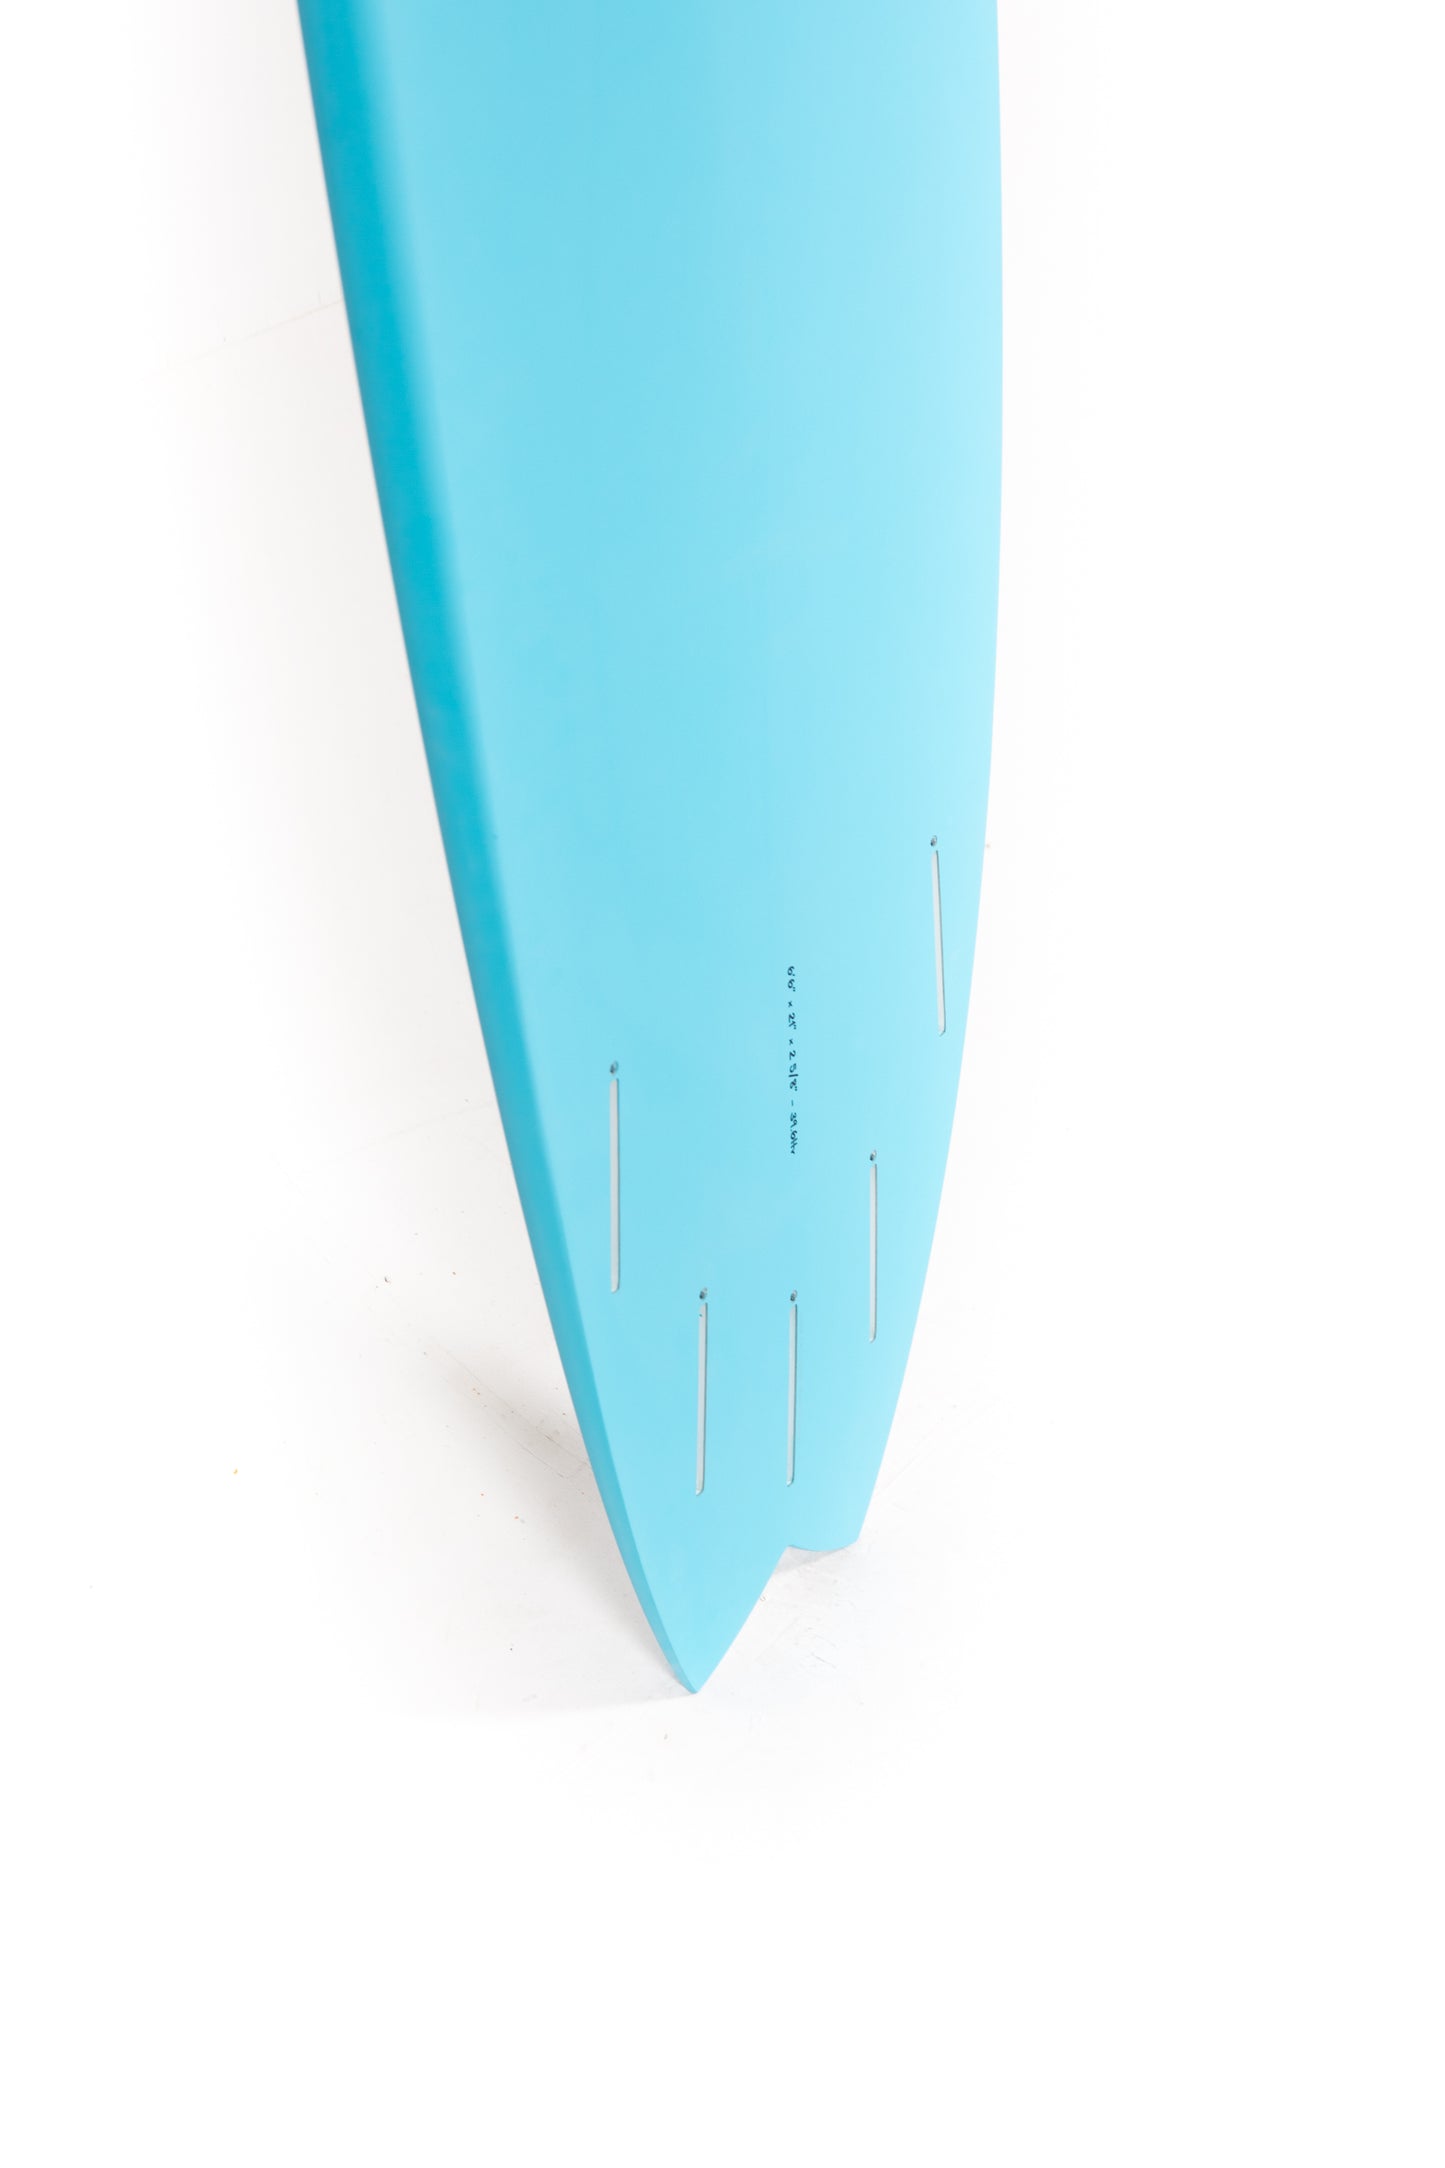 
                  
                    Pukas Surf Shop - Torq Surfboards - MODFISH - 6'6" x 21 x 2 5/8 - 39,6L
                  
                